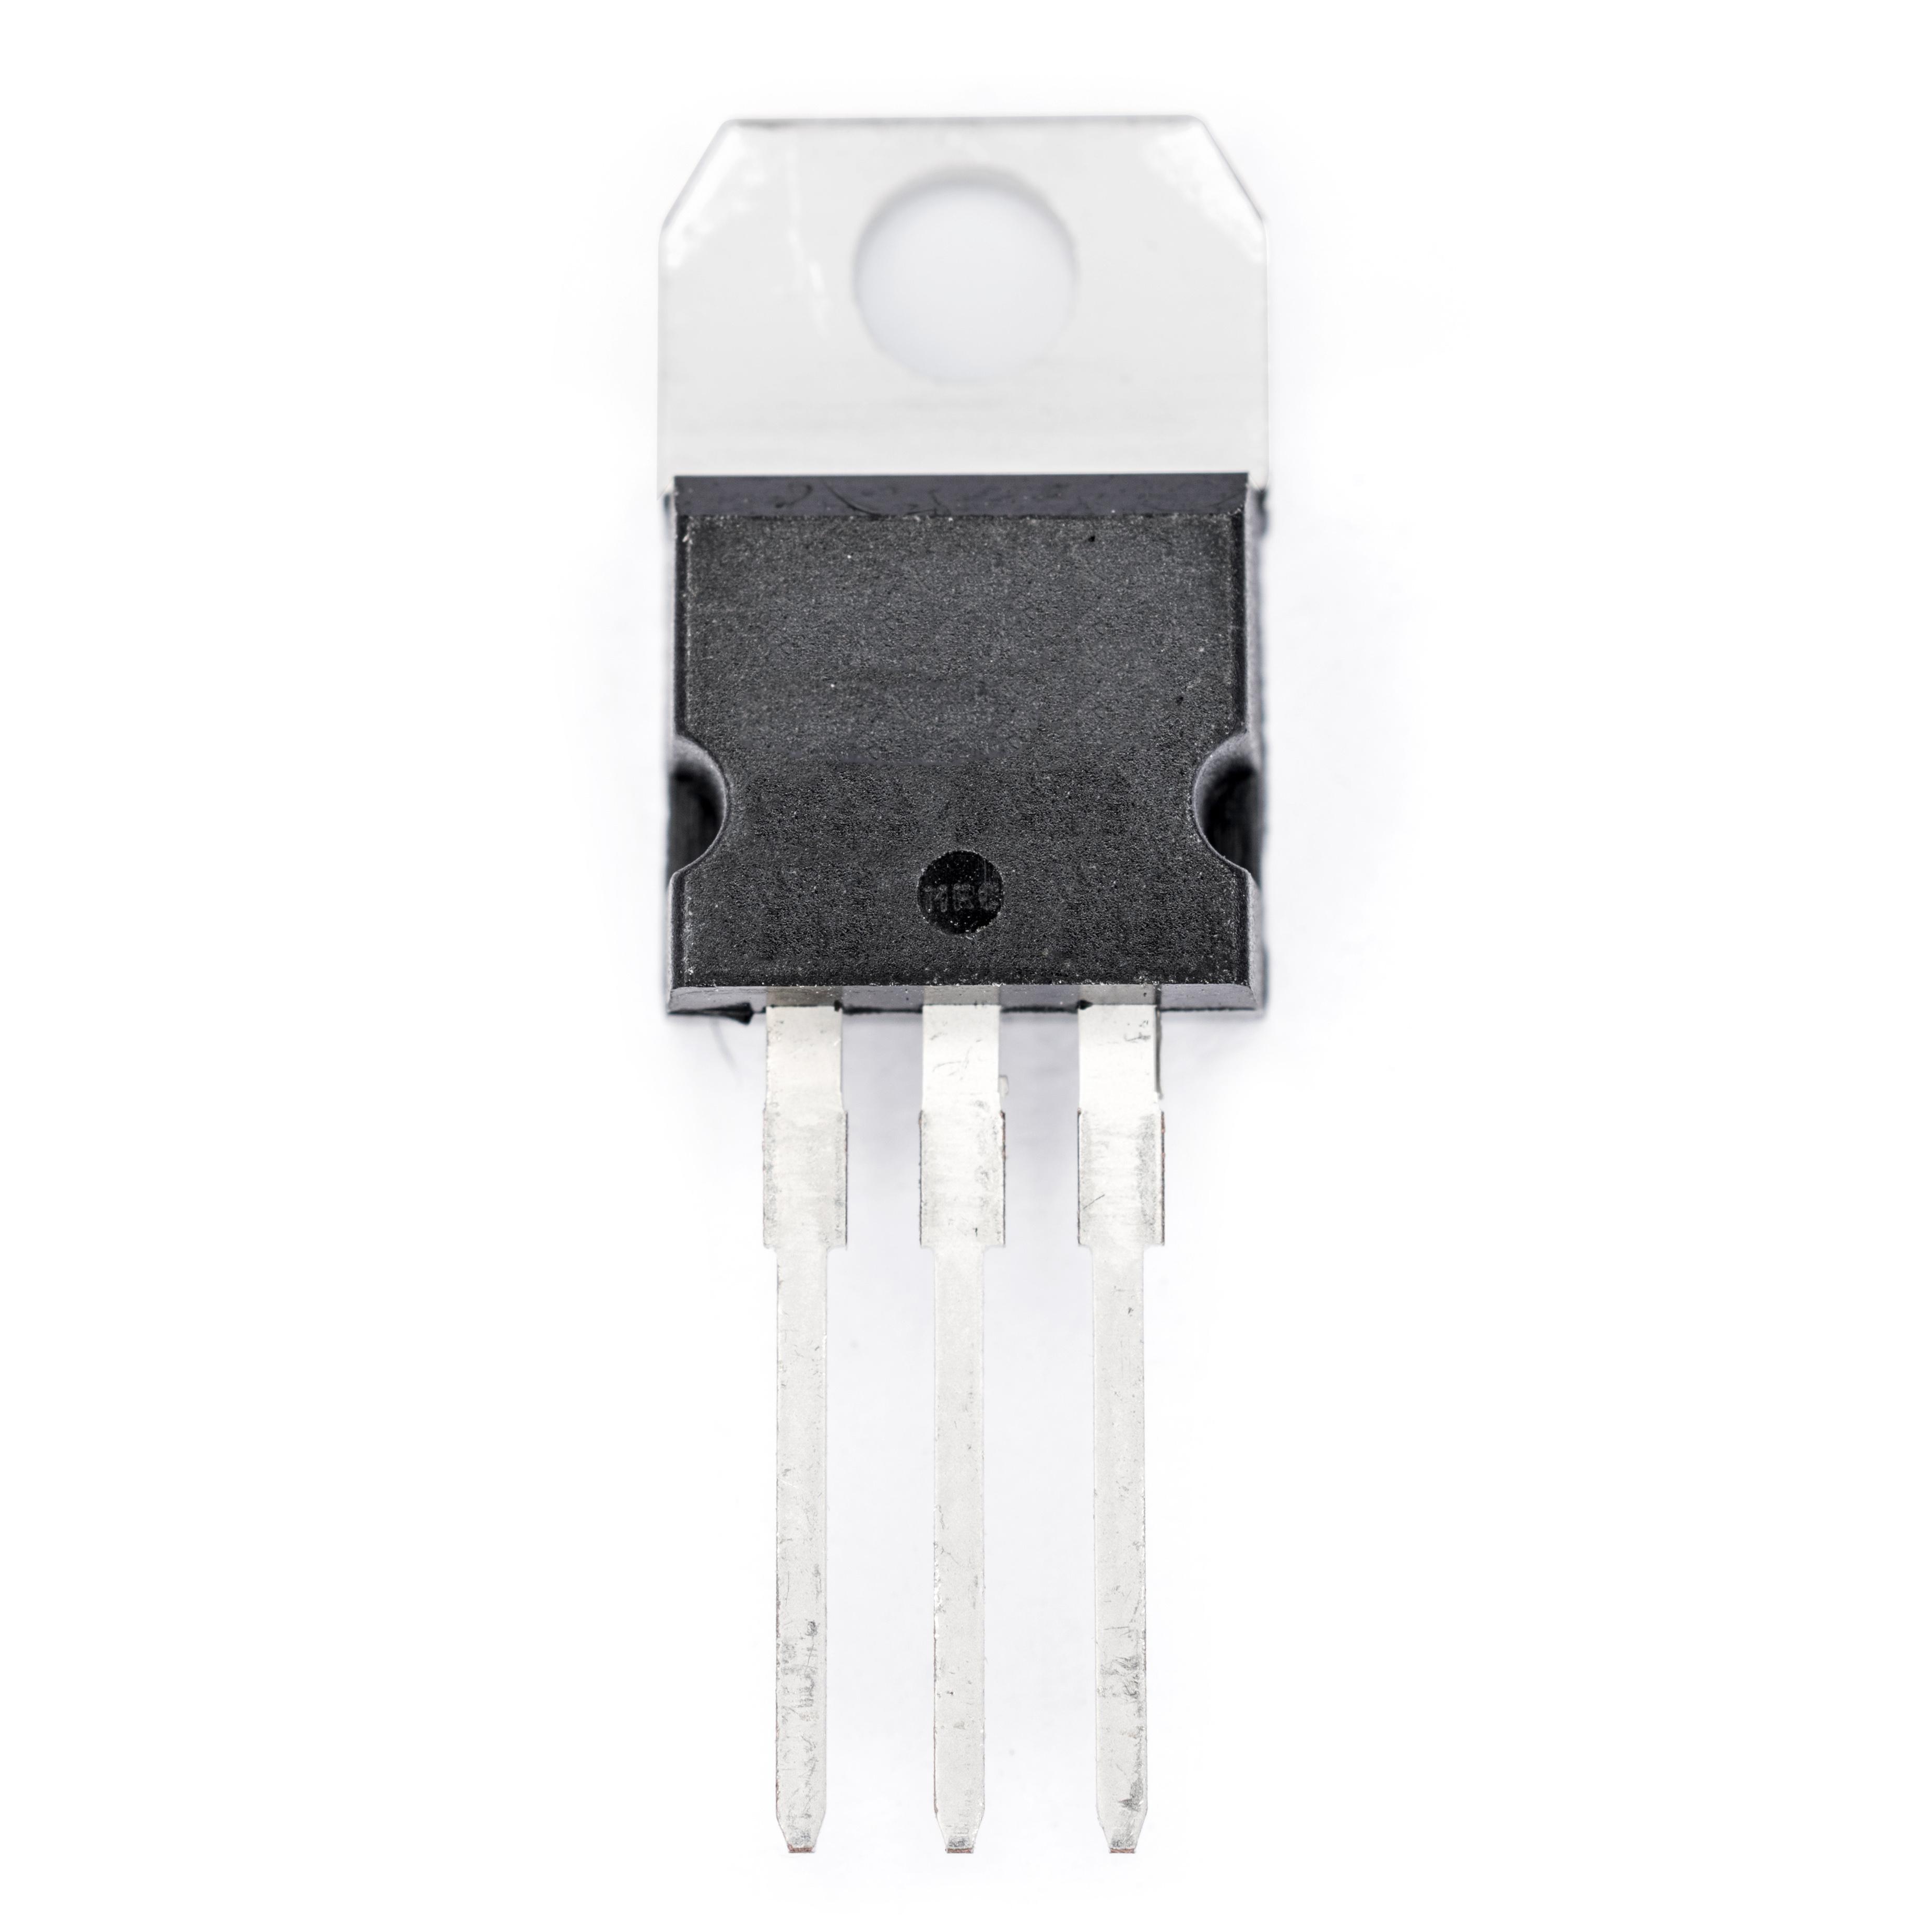 TIP102 (Bipolartransistor NPN) ST ab 0.21 EUR - Radiomag GmbH